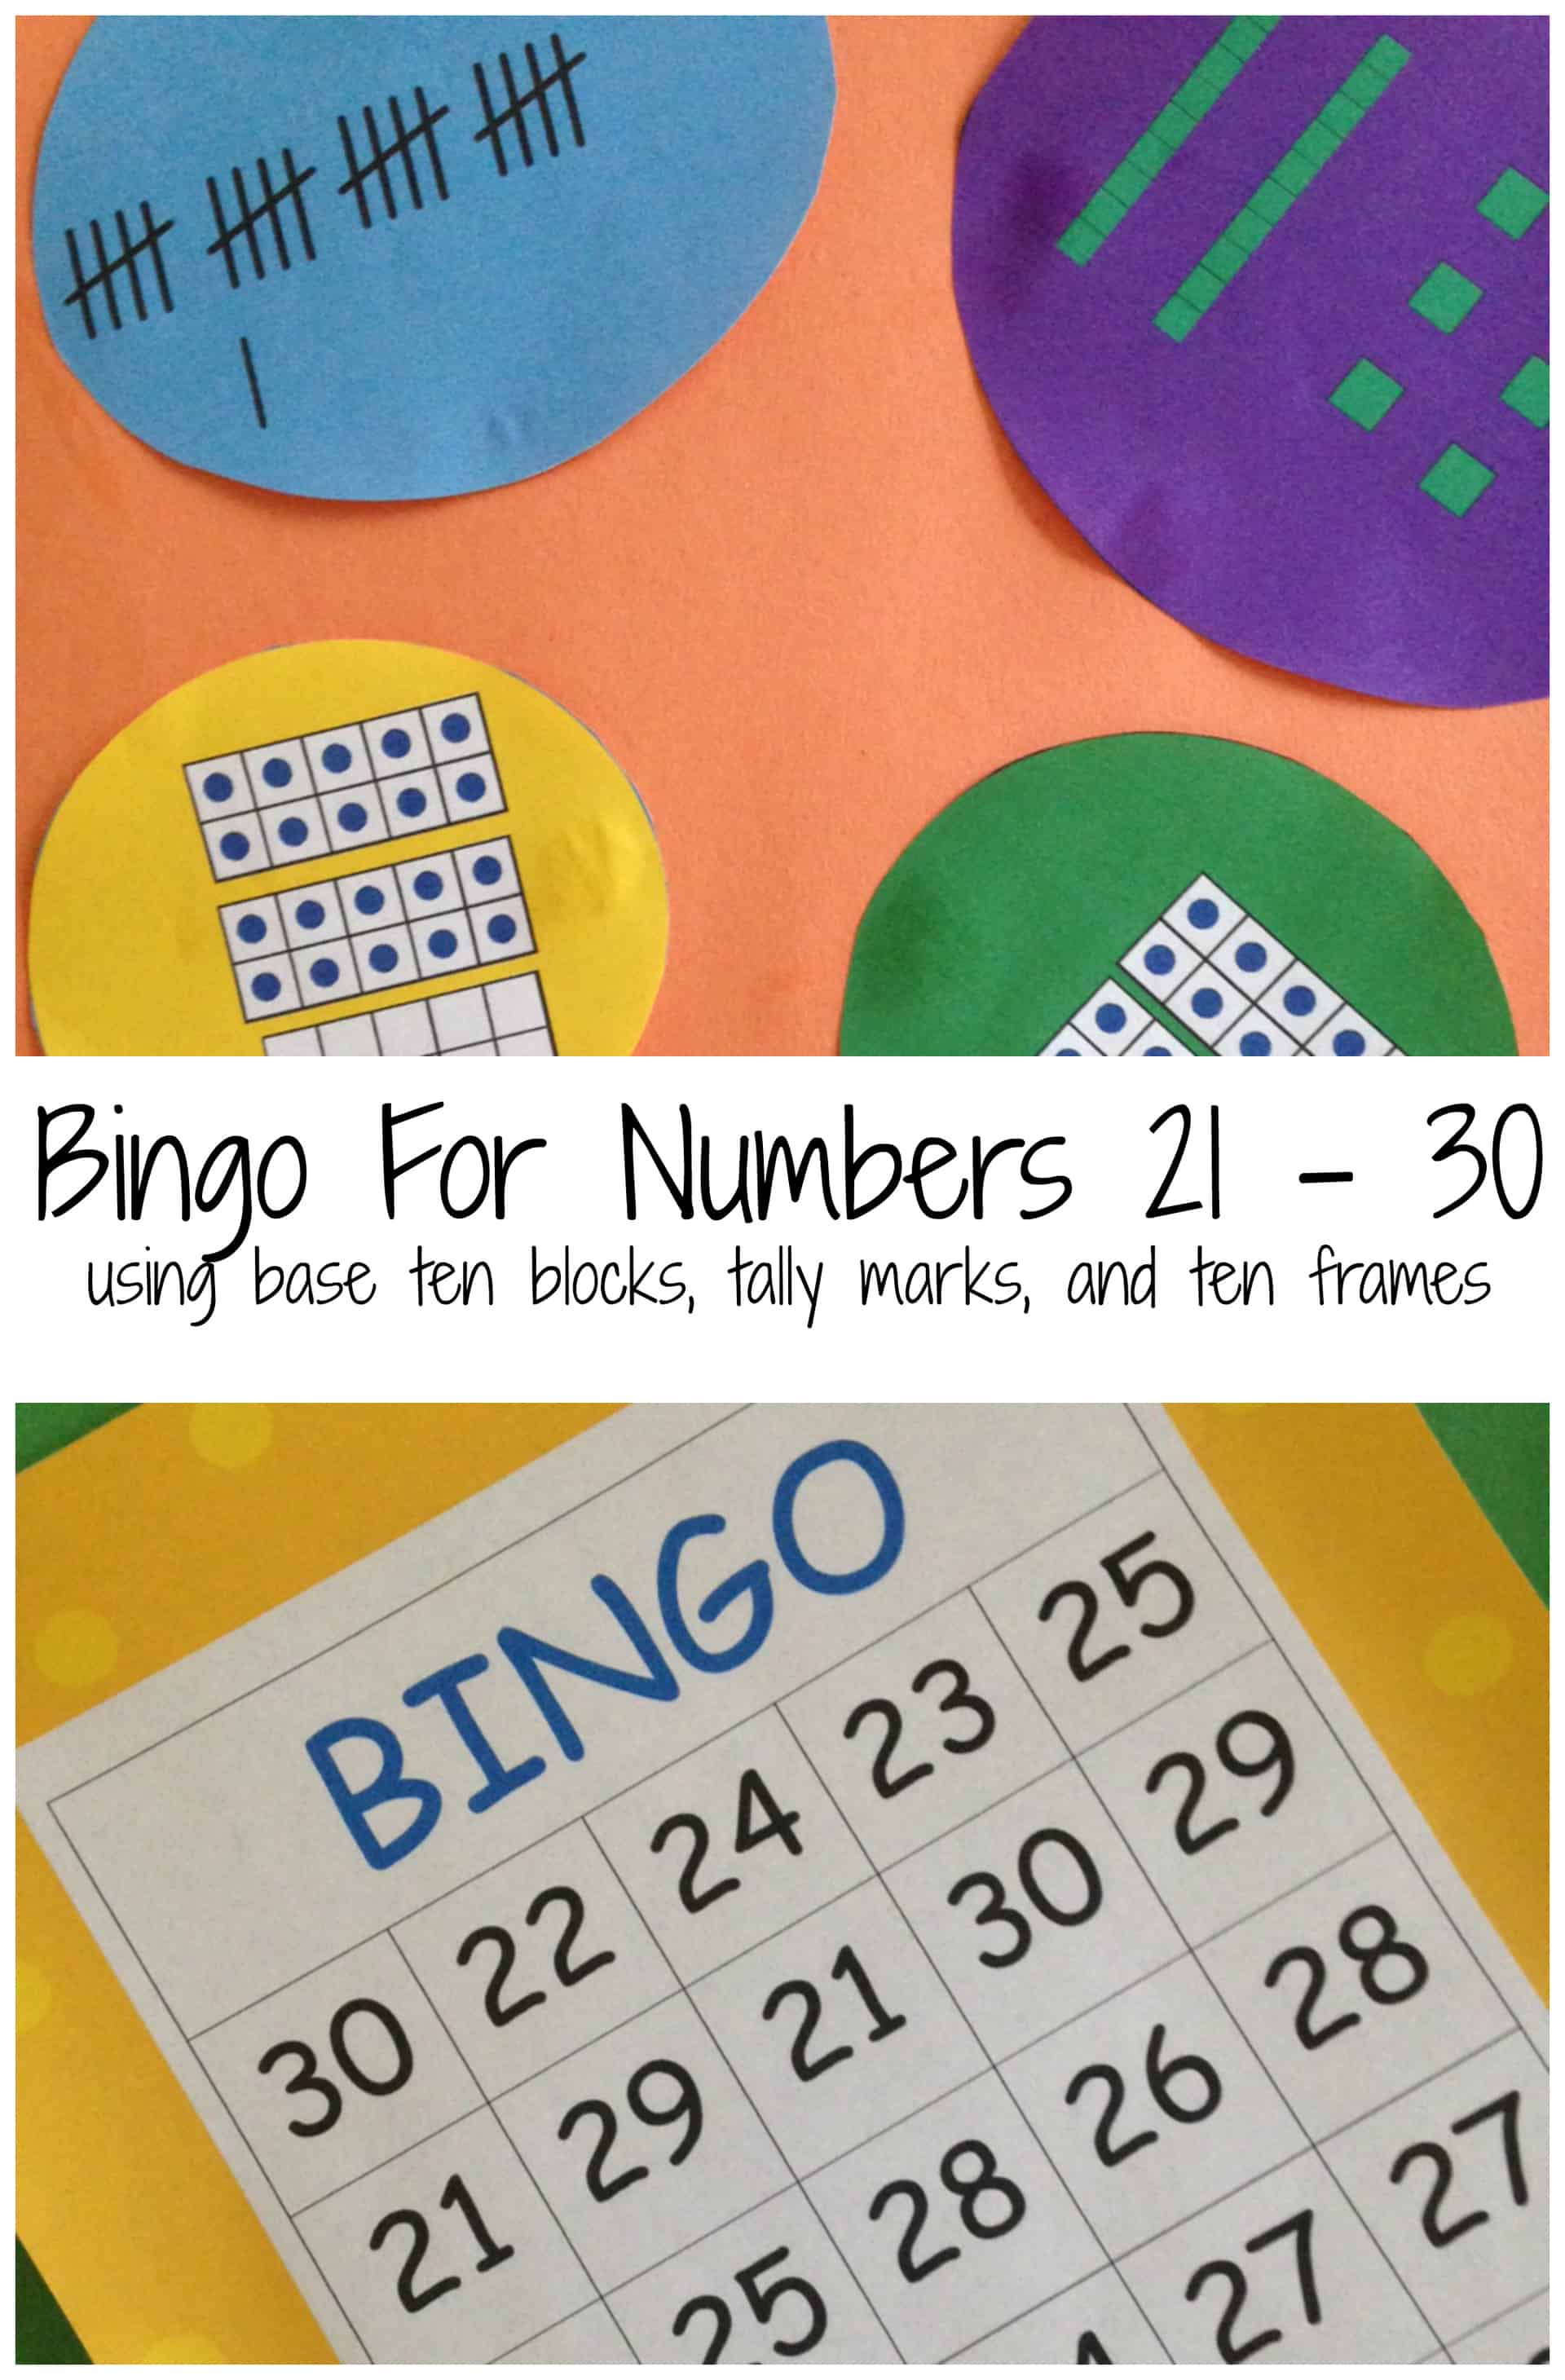 bingo-for-numbers-21-50